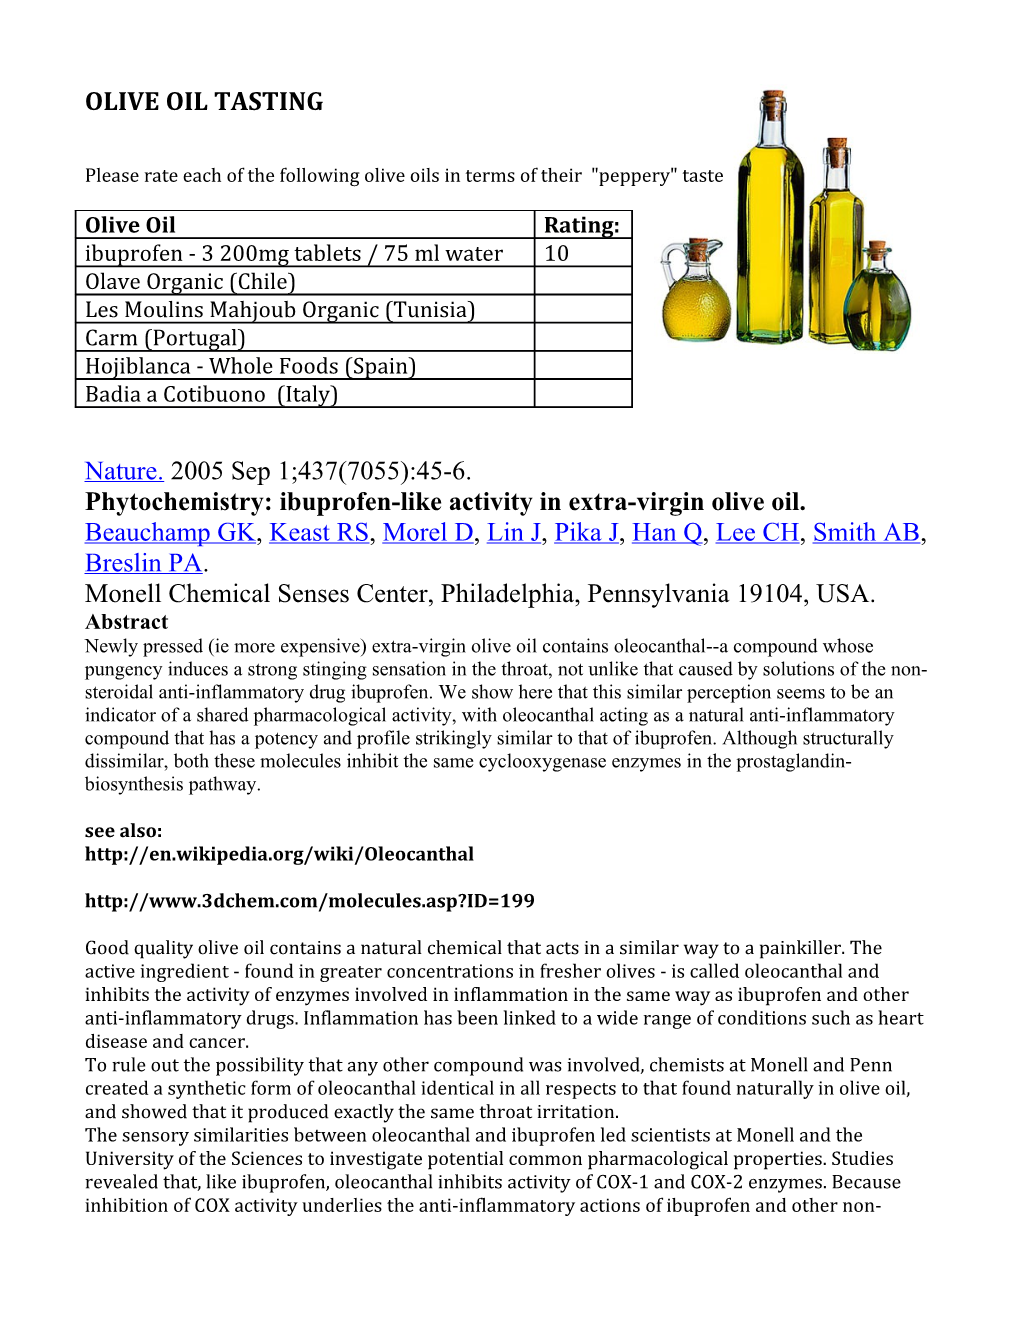 Phytochemistry: Ibuprofen-Like Activity in Extra-Virgin Olive Oil